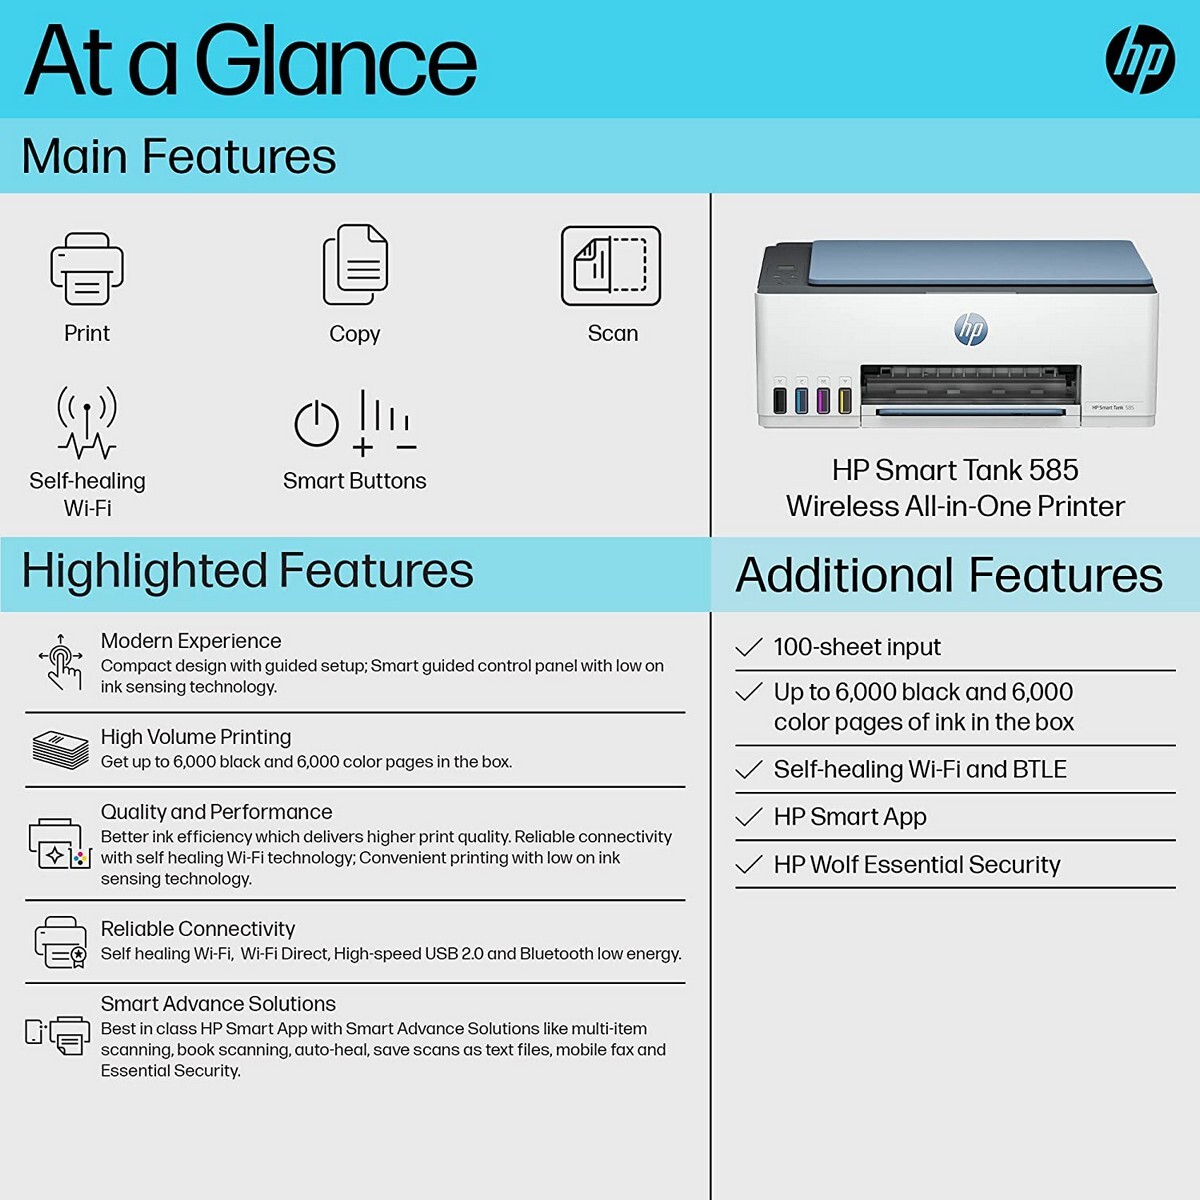 HP Smart Tank MF Printer 585